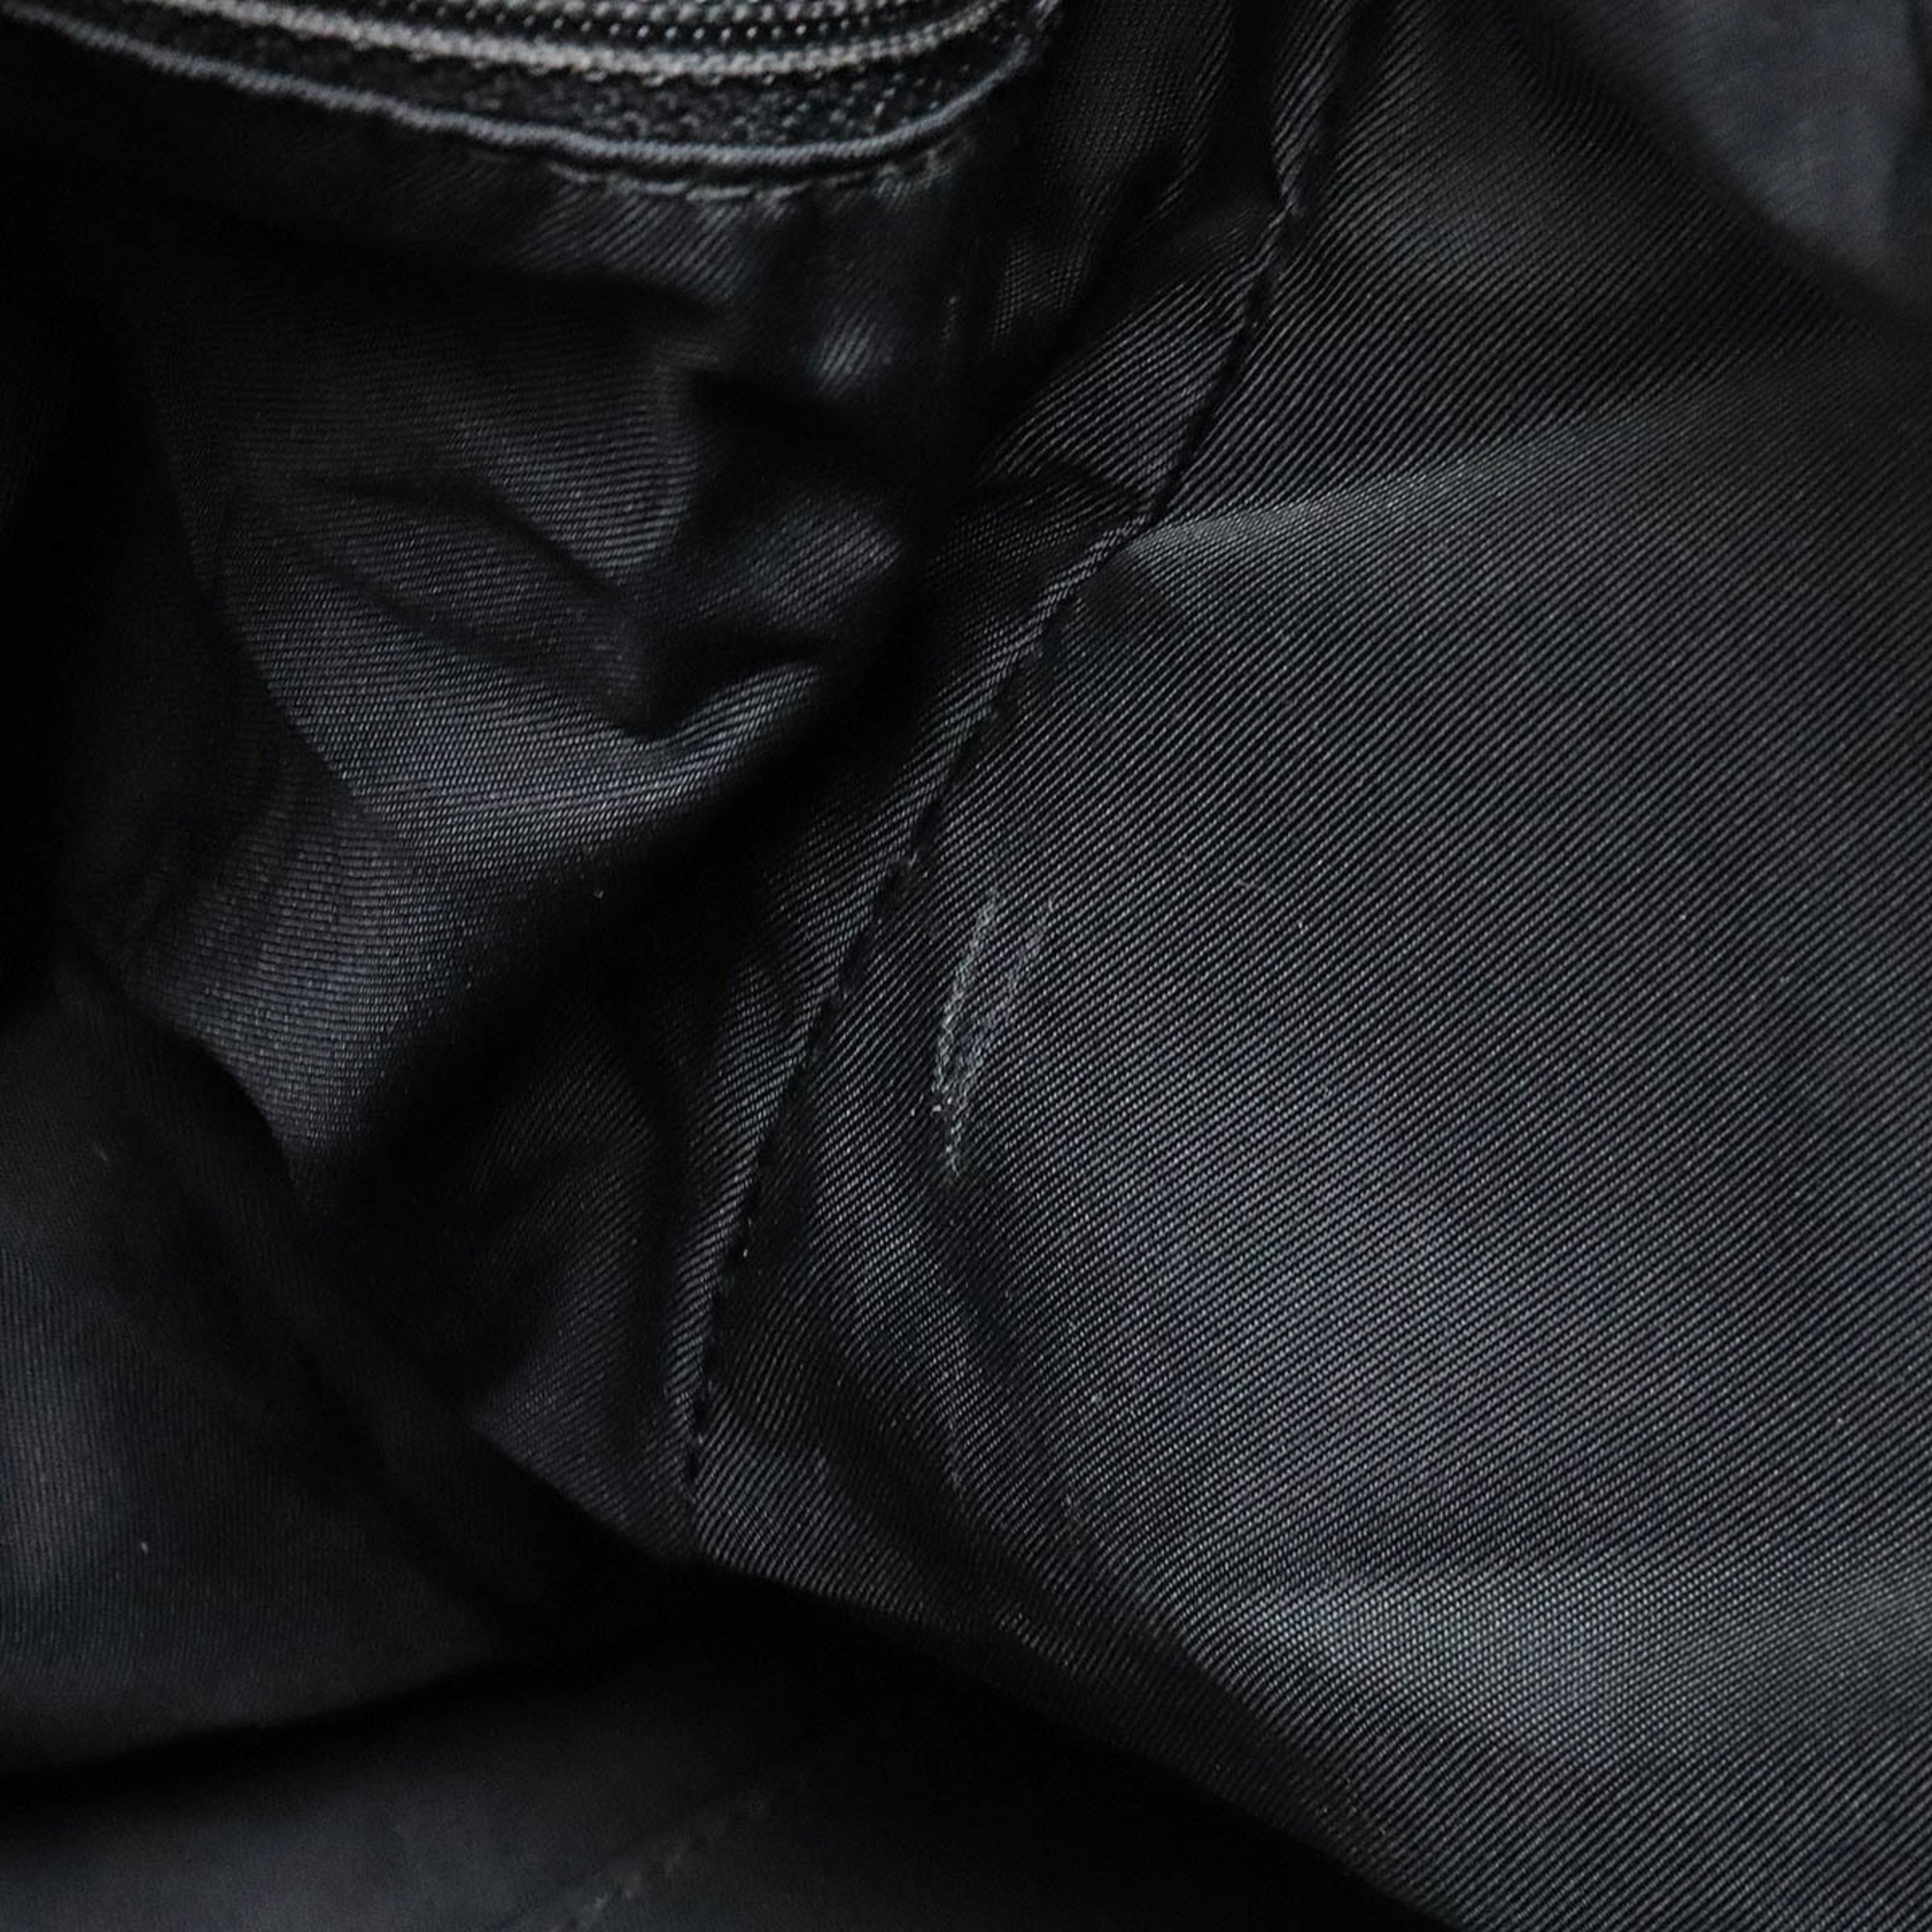 CHANEL New Travel Line Boston Bag Shoulder Nylon Jacquard Leather Black A15969